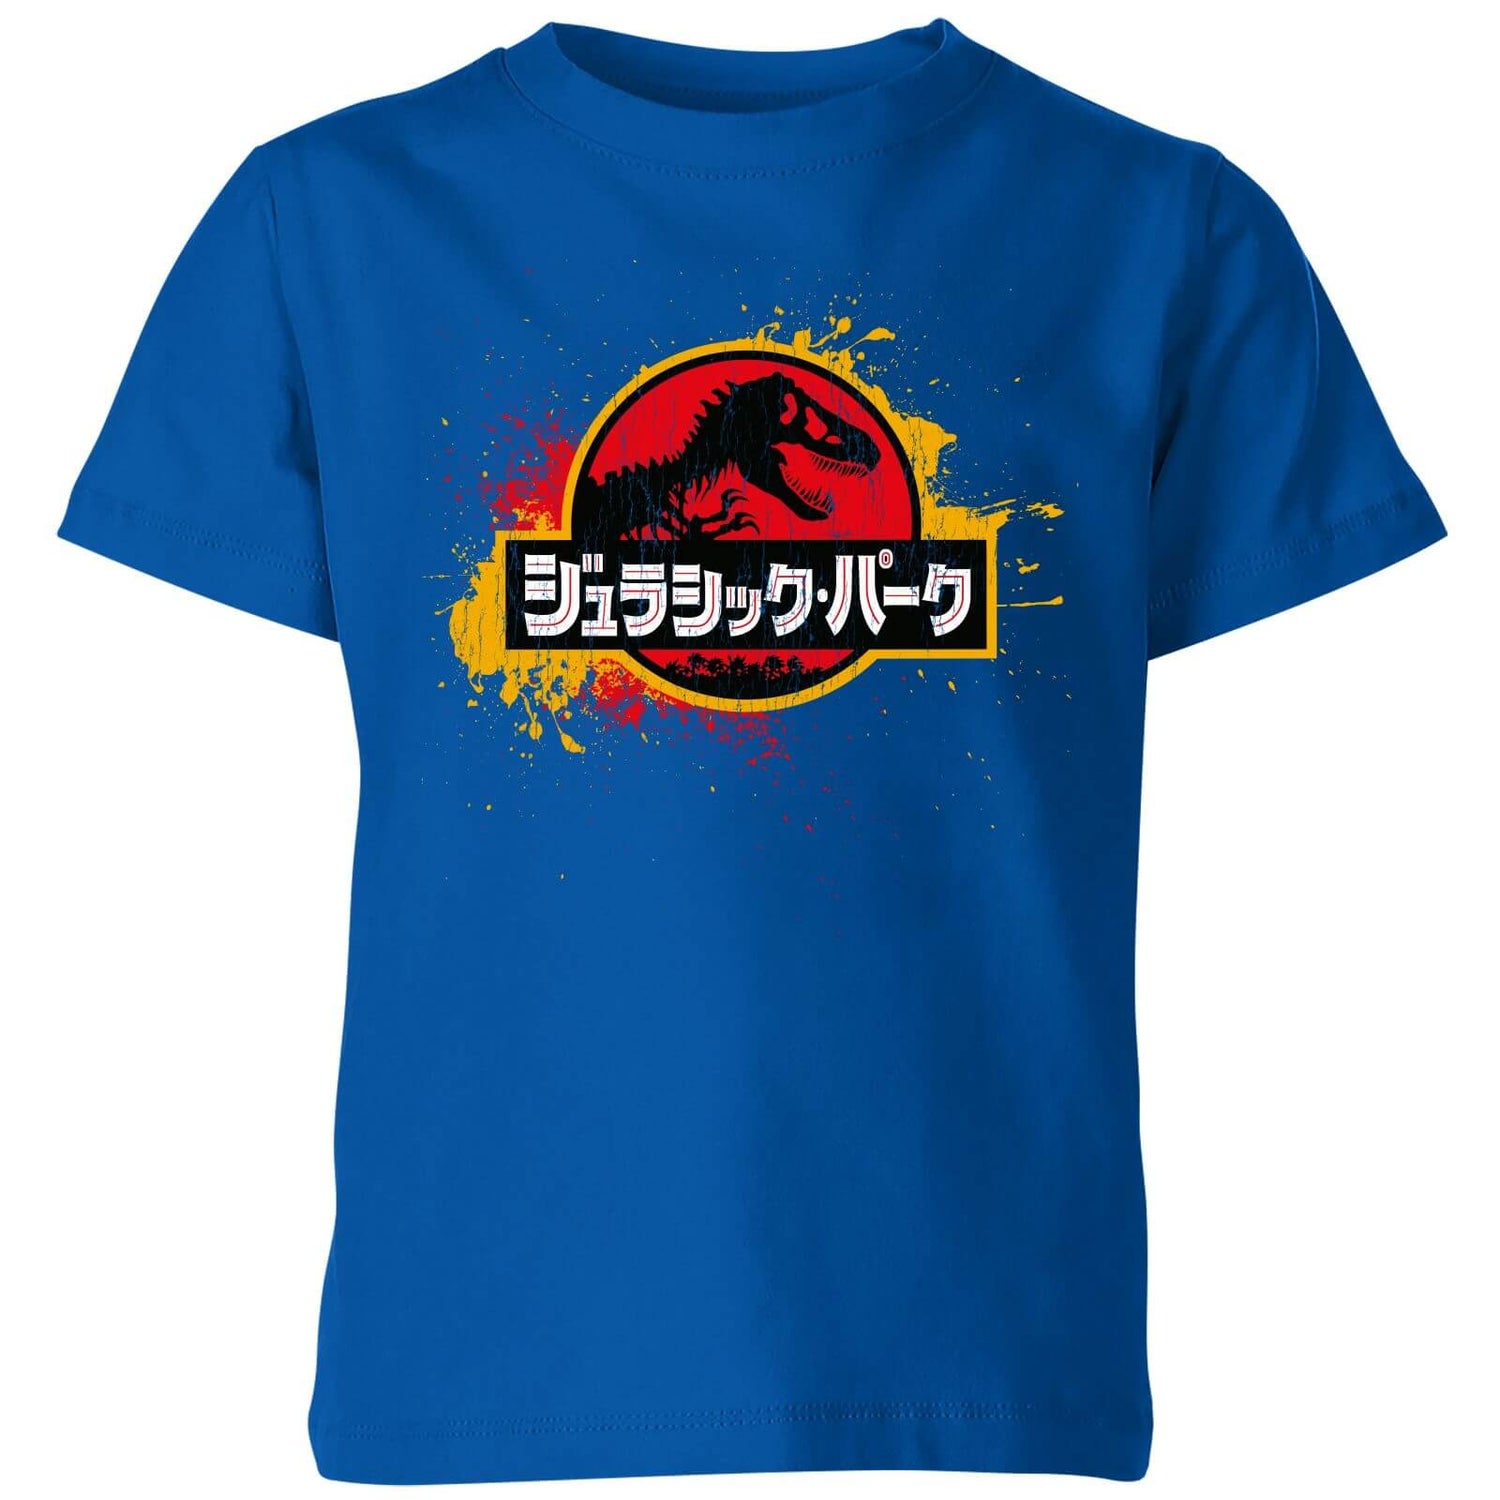 Jurassic Park Kids' T-Shirt - Blue